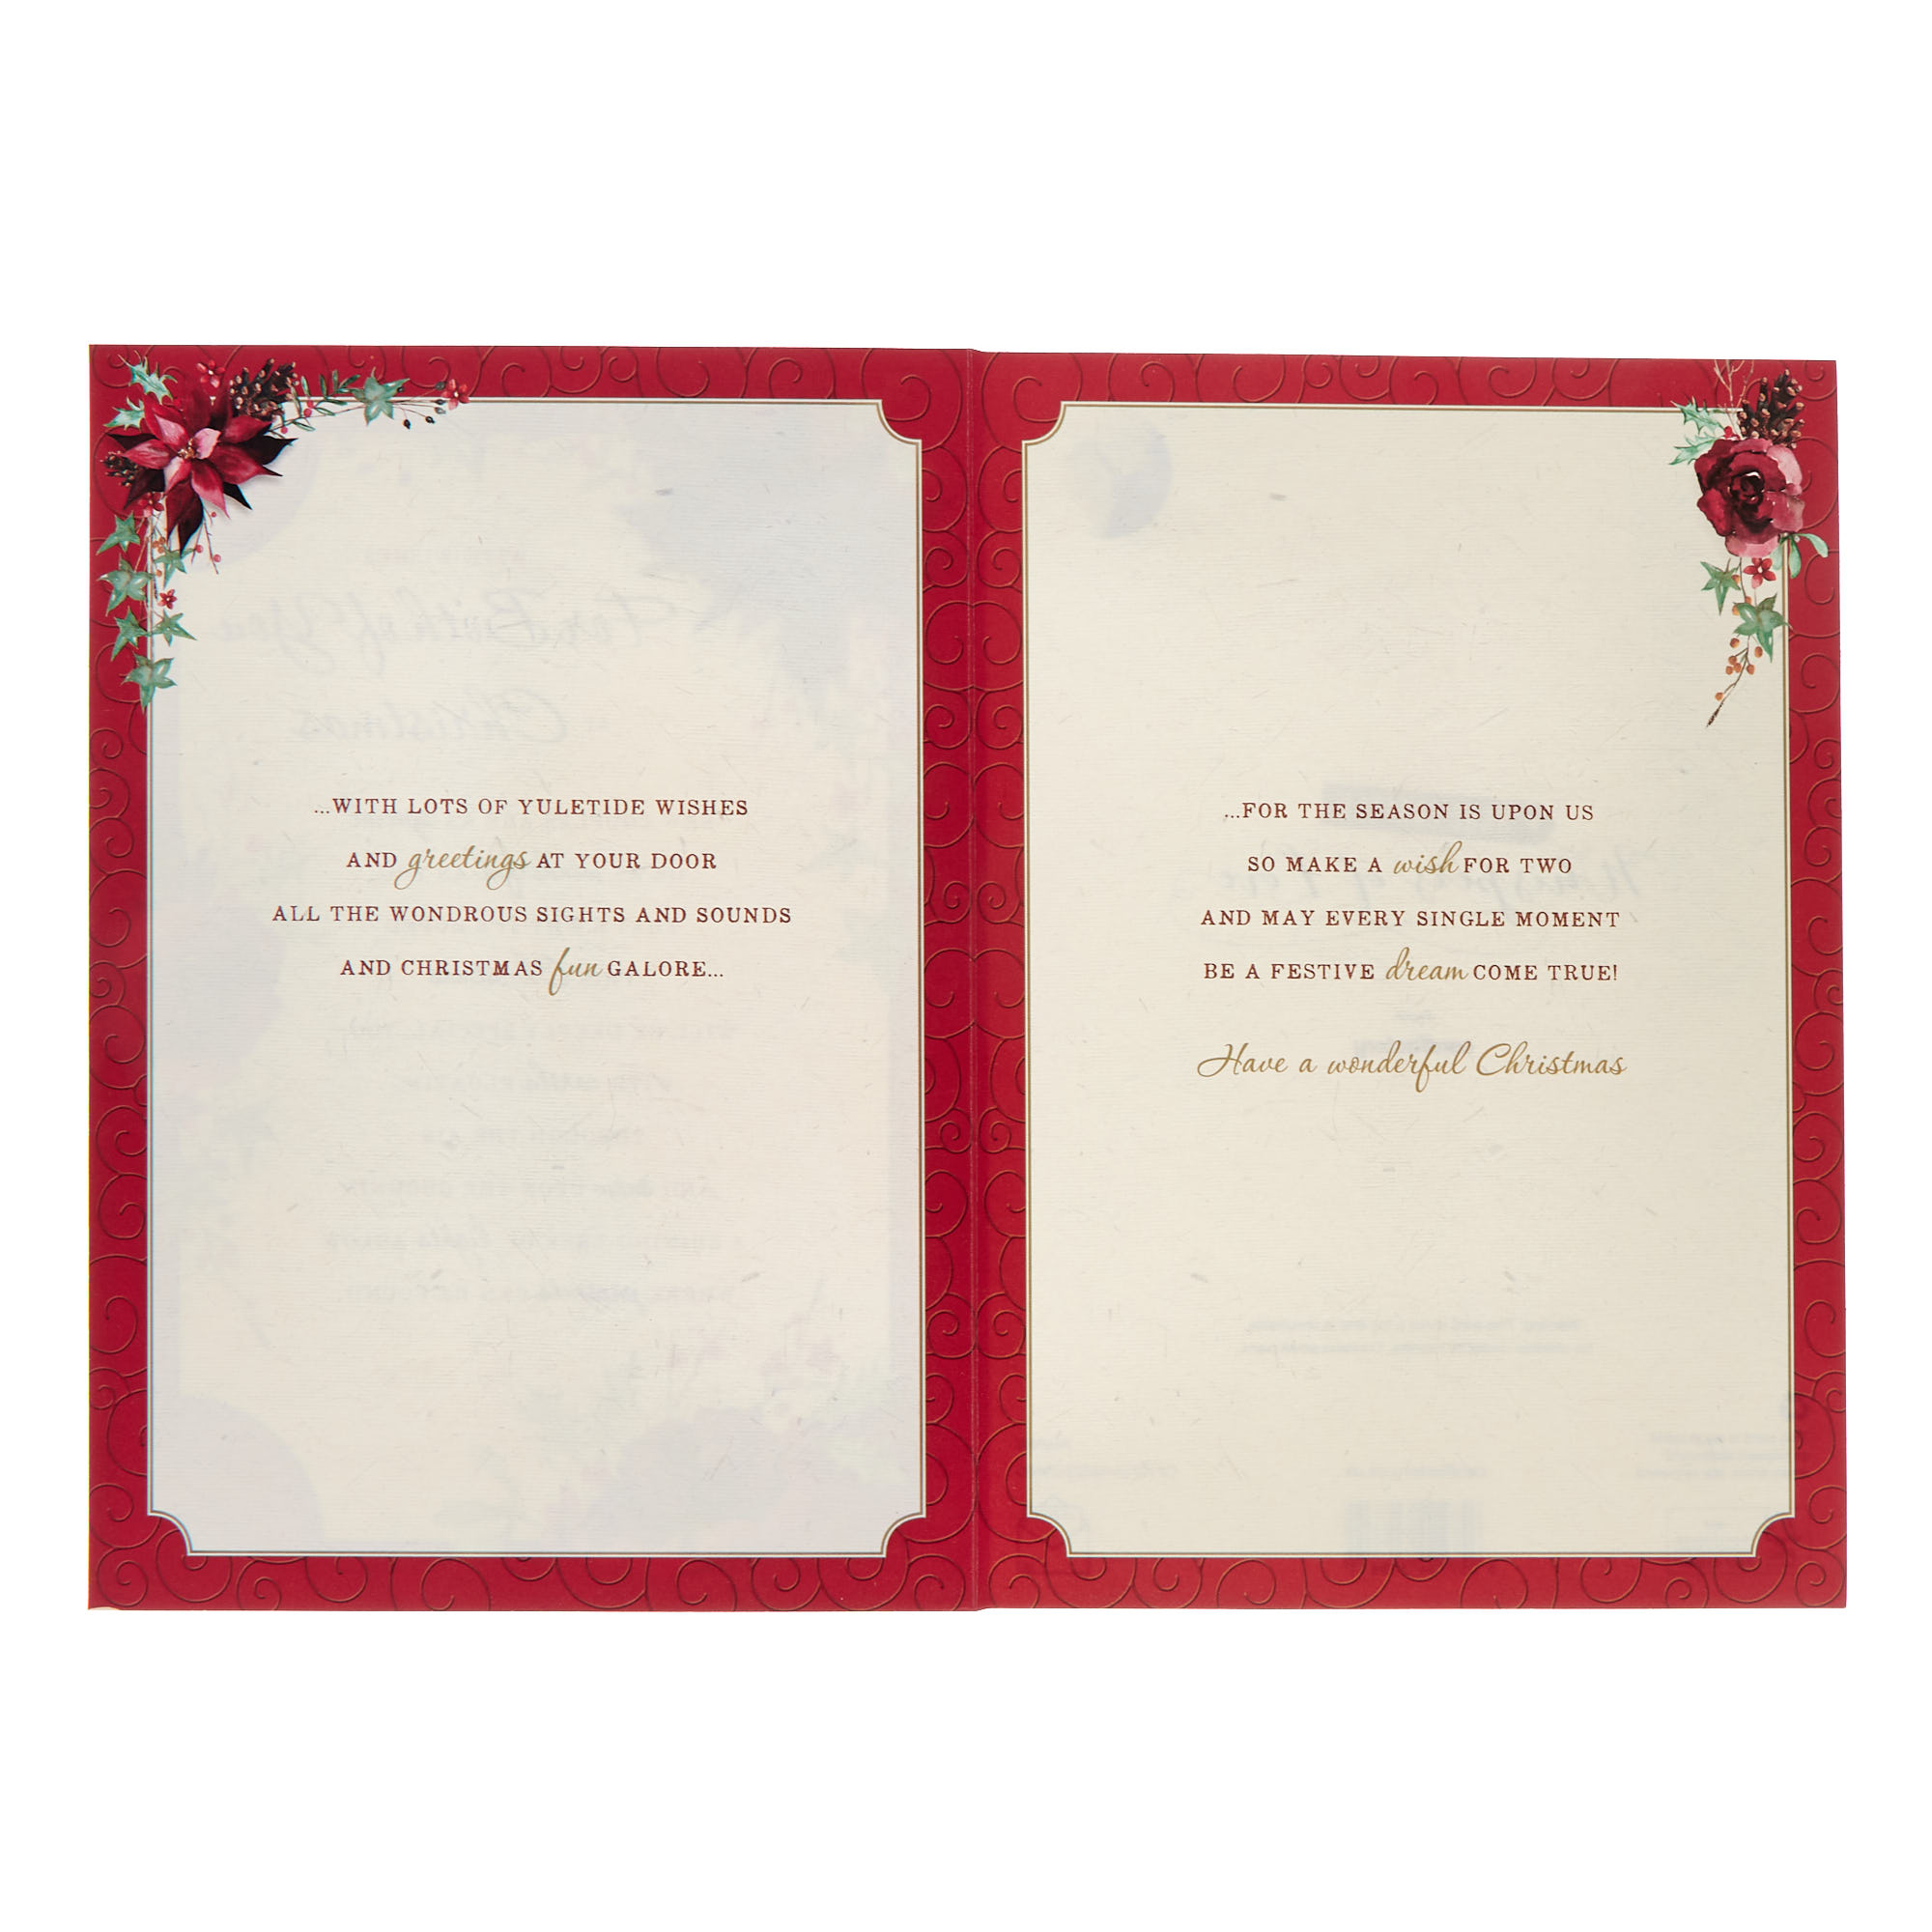 For Both Verse Poinsettias Christmas Card